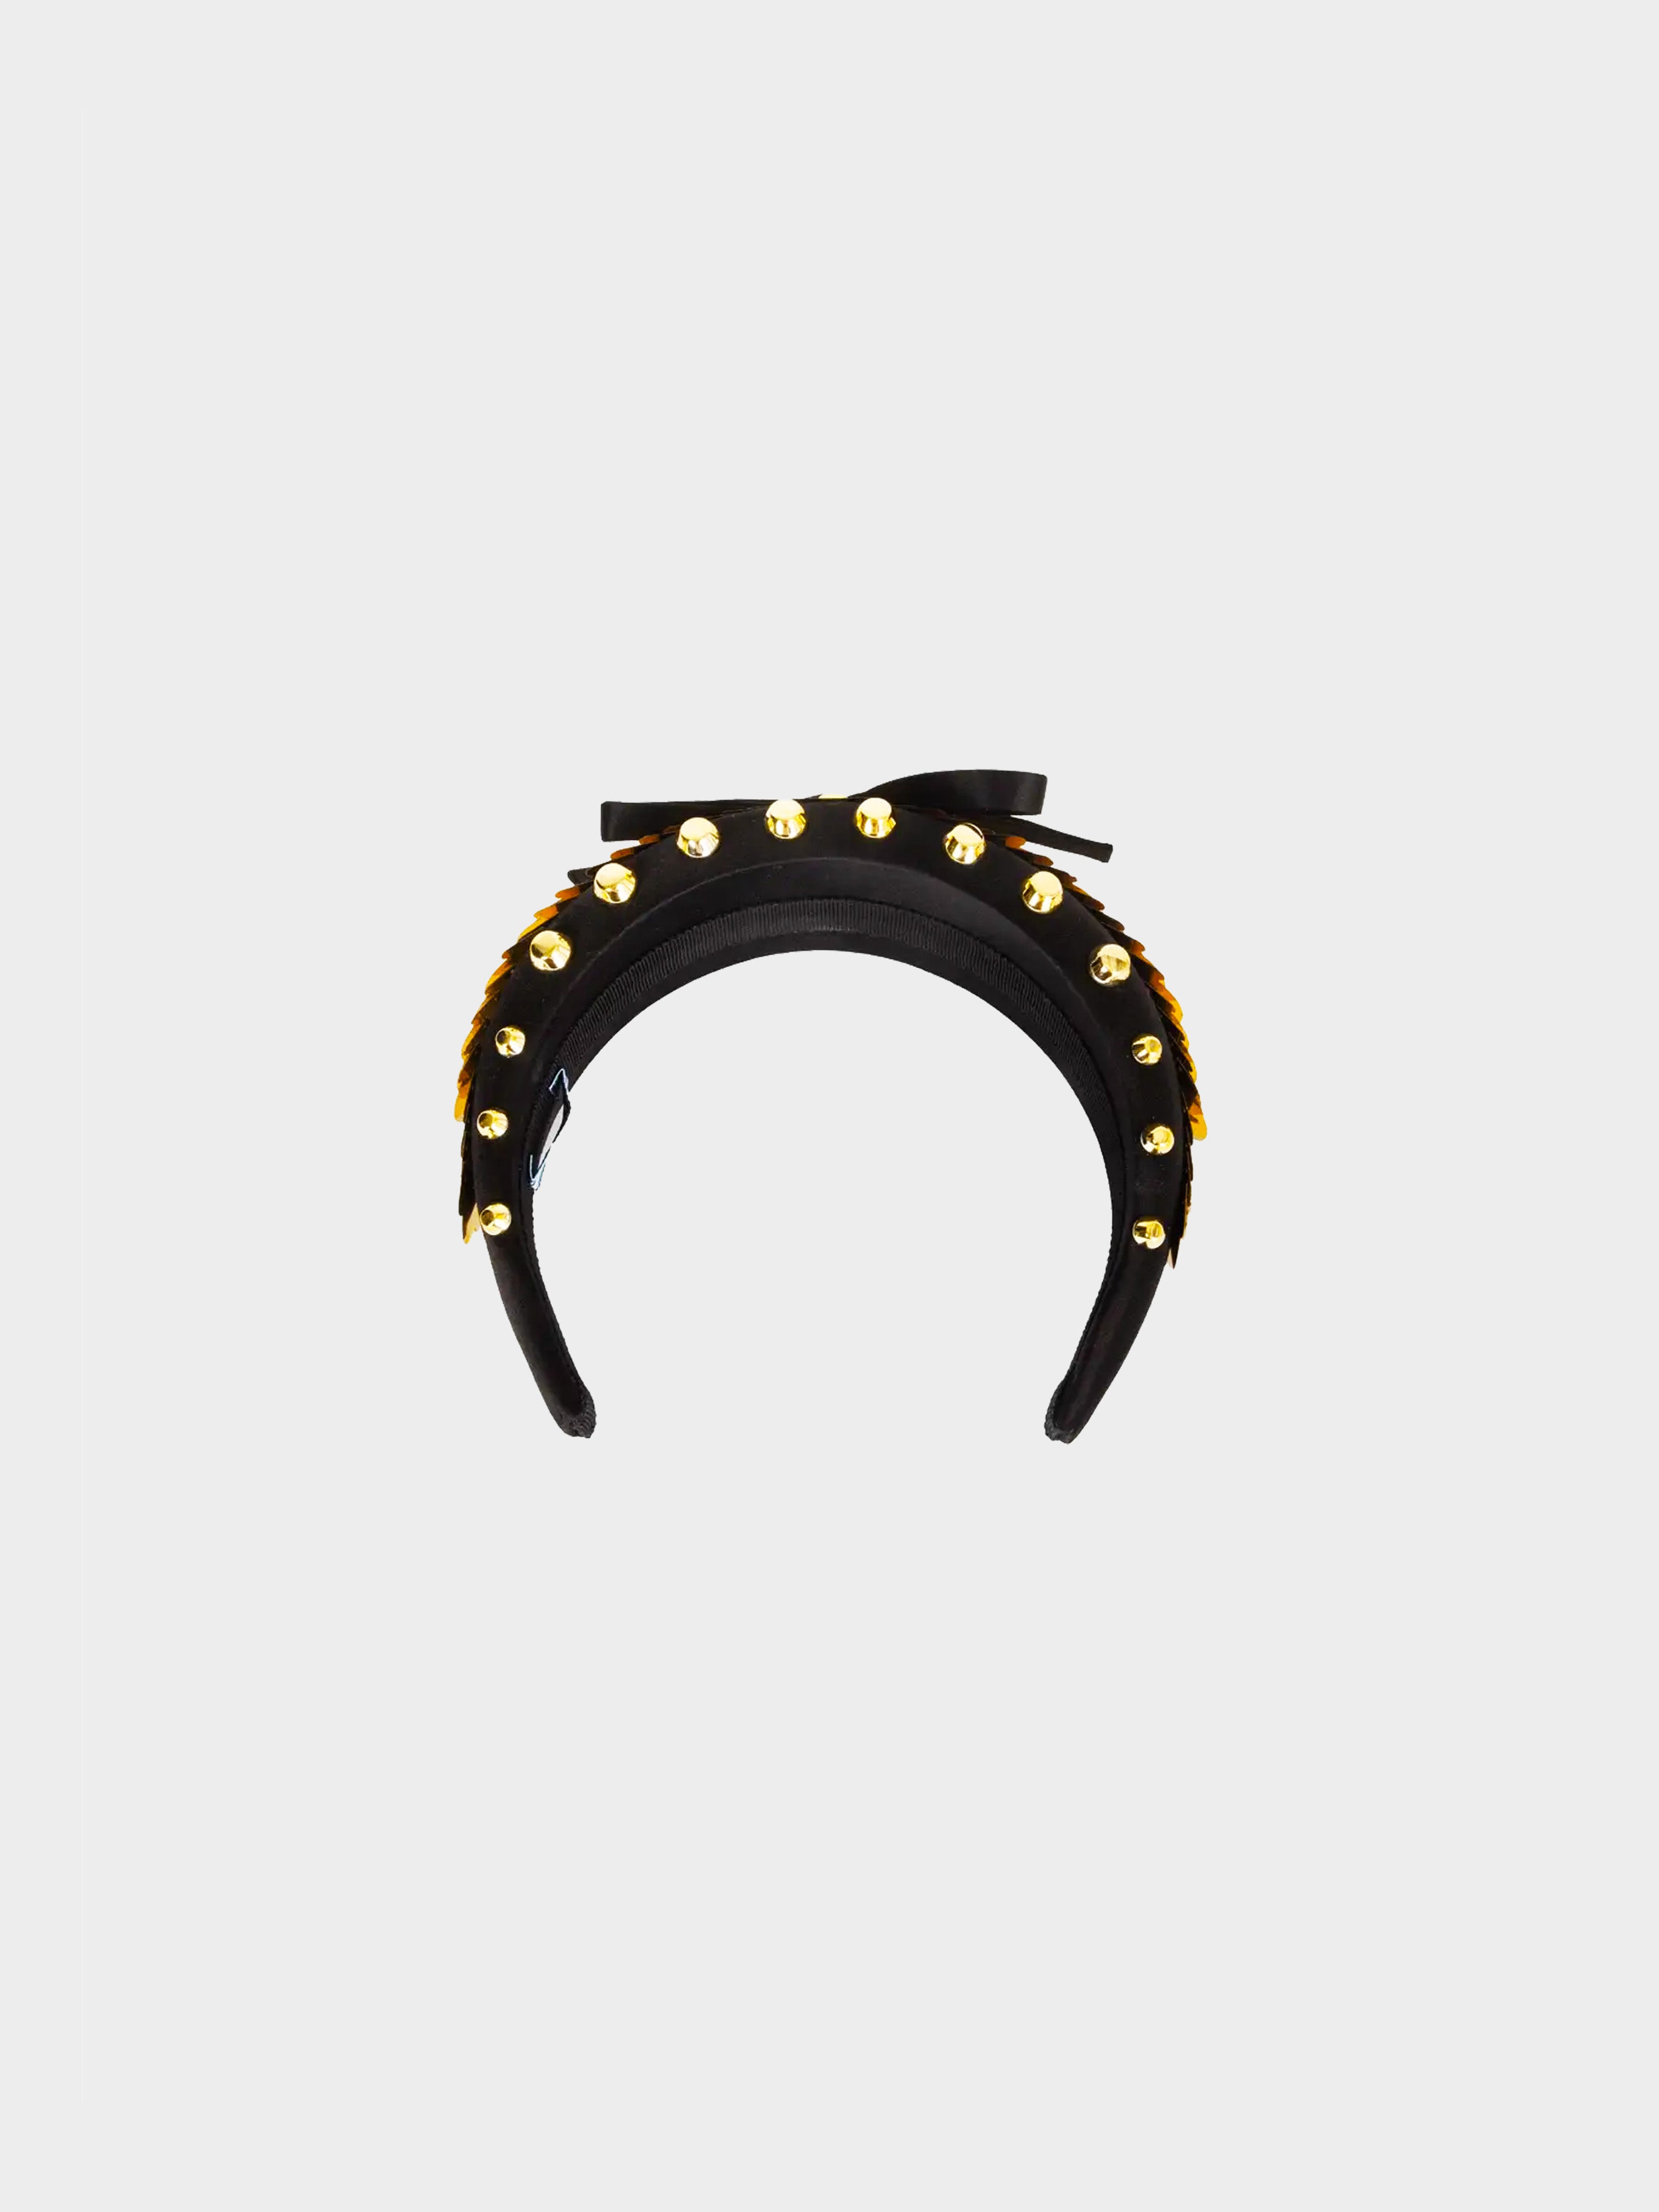 Prada 2010s Black and Gold Satin Studded Headband